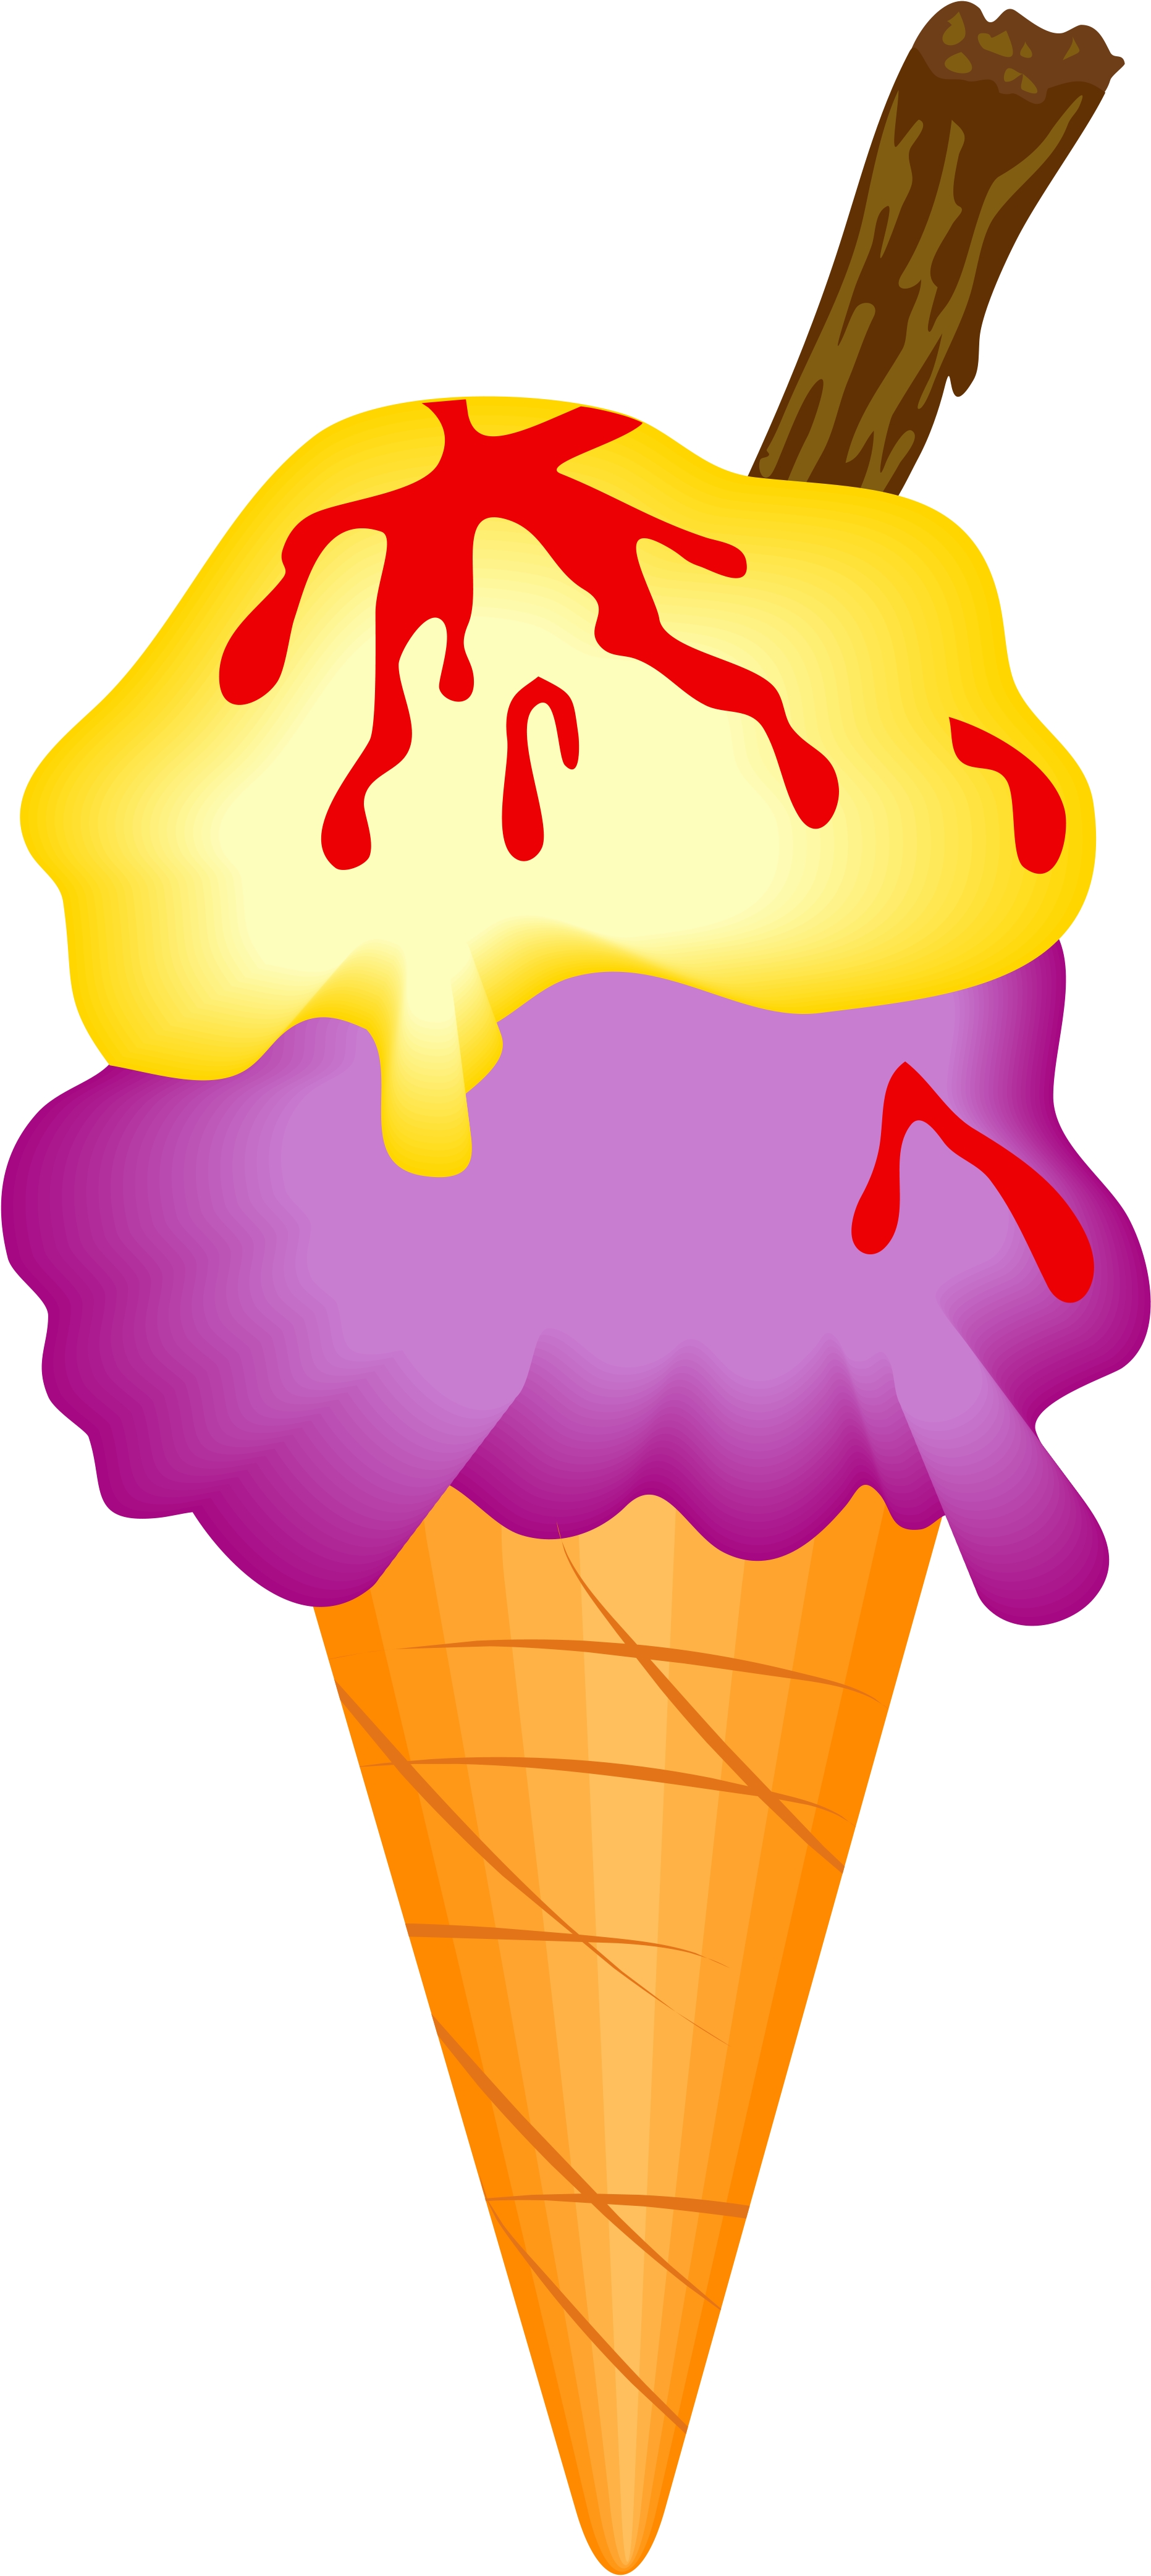 clipart of ice cream cone - photo #46